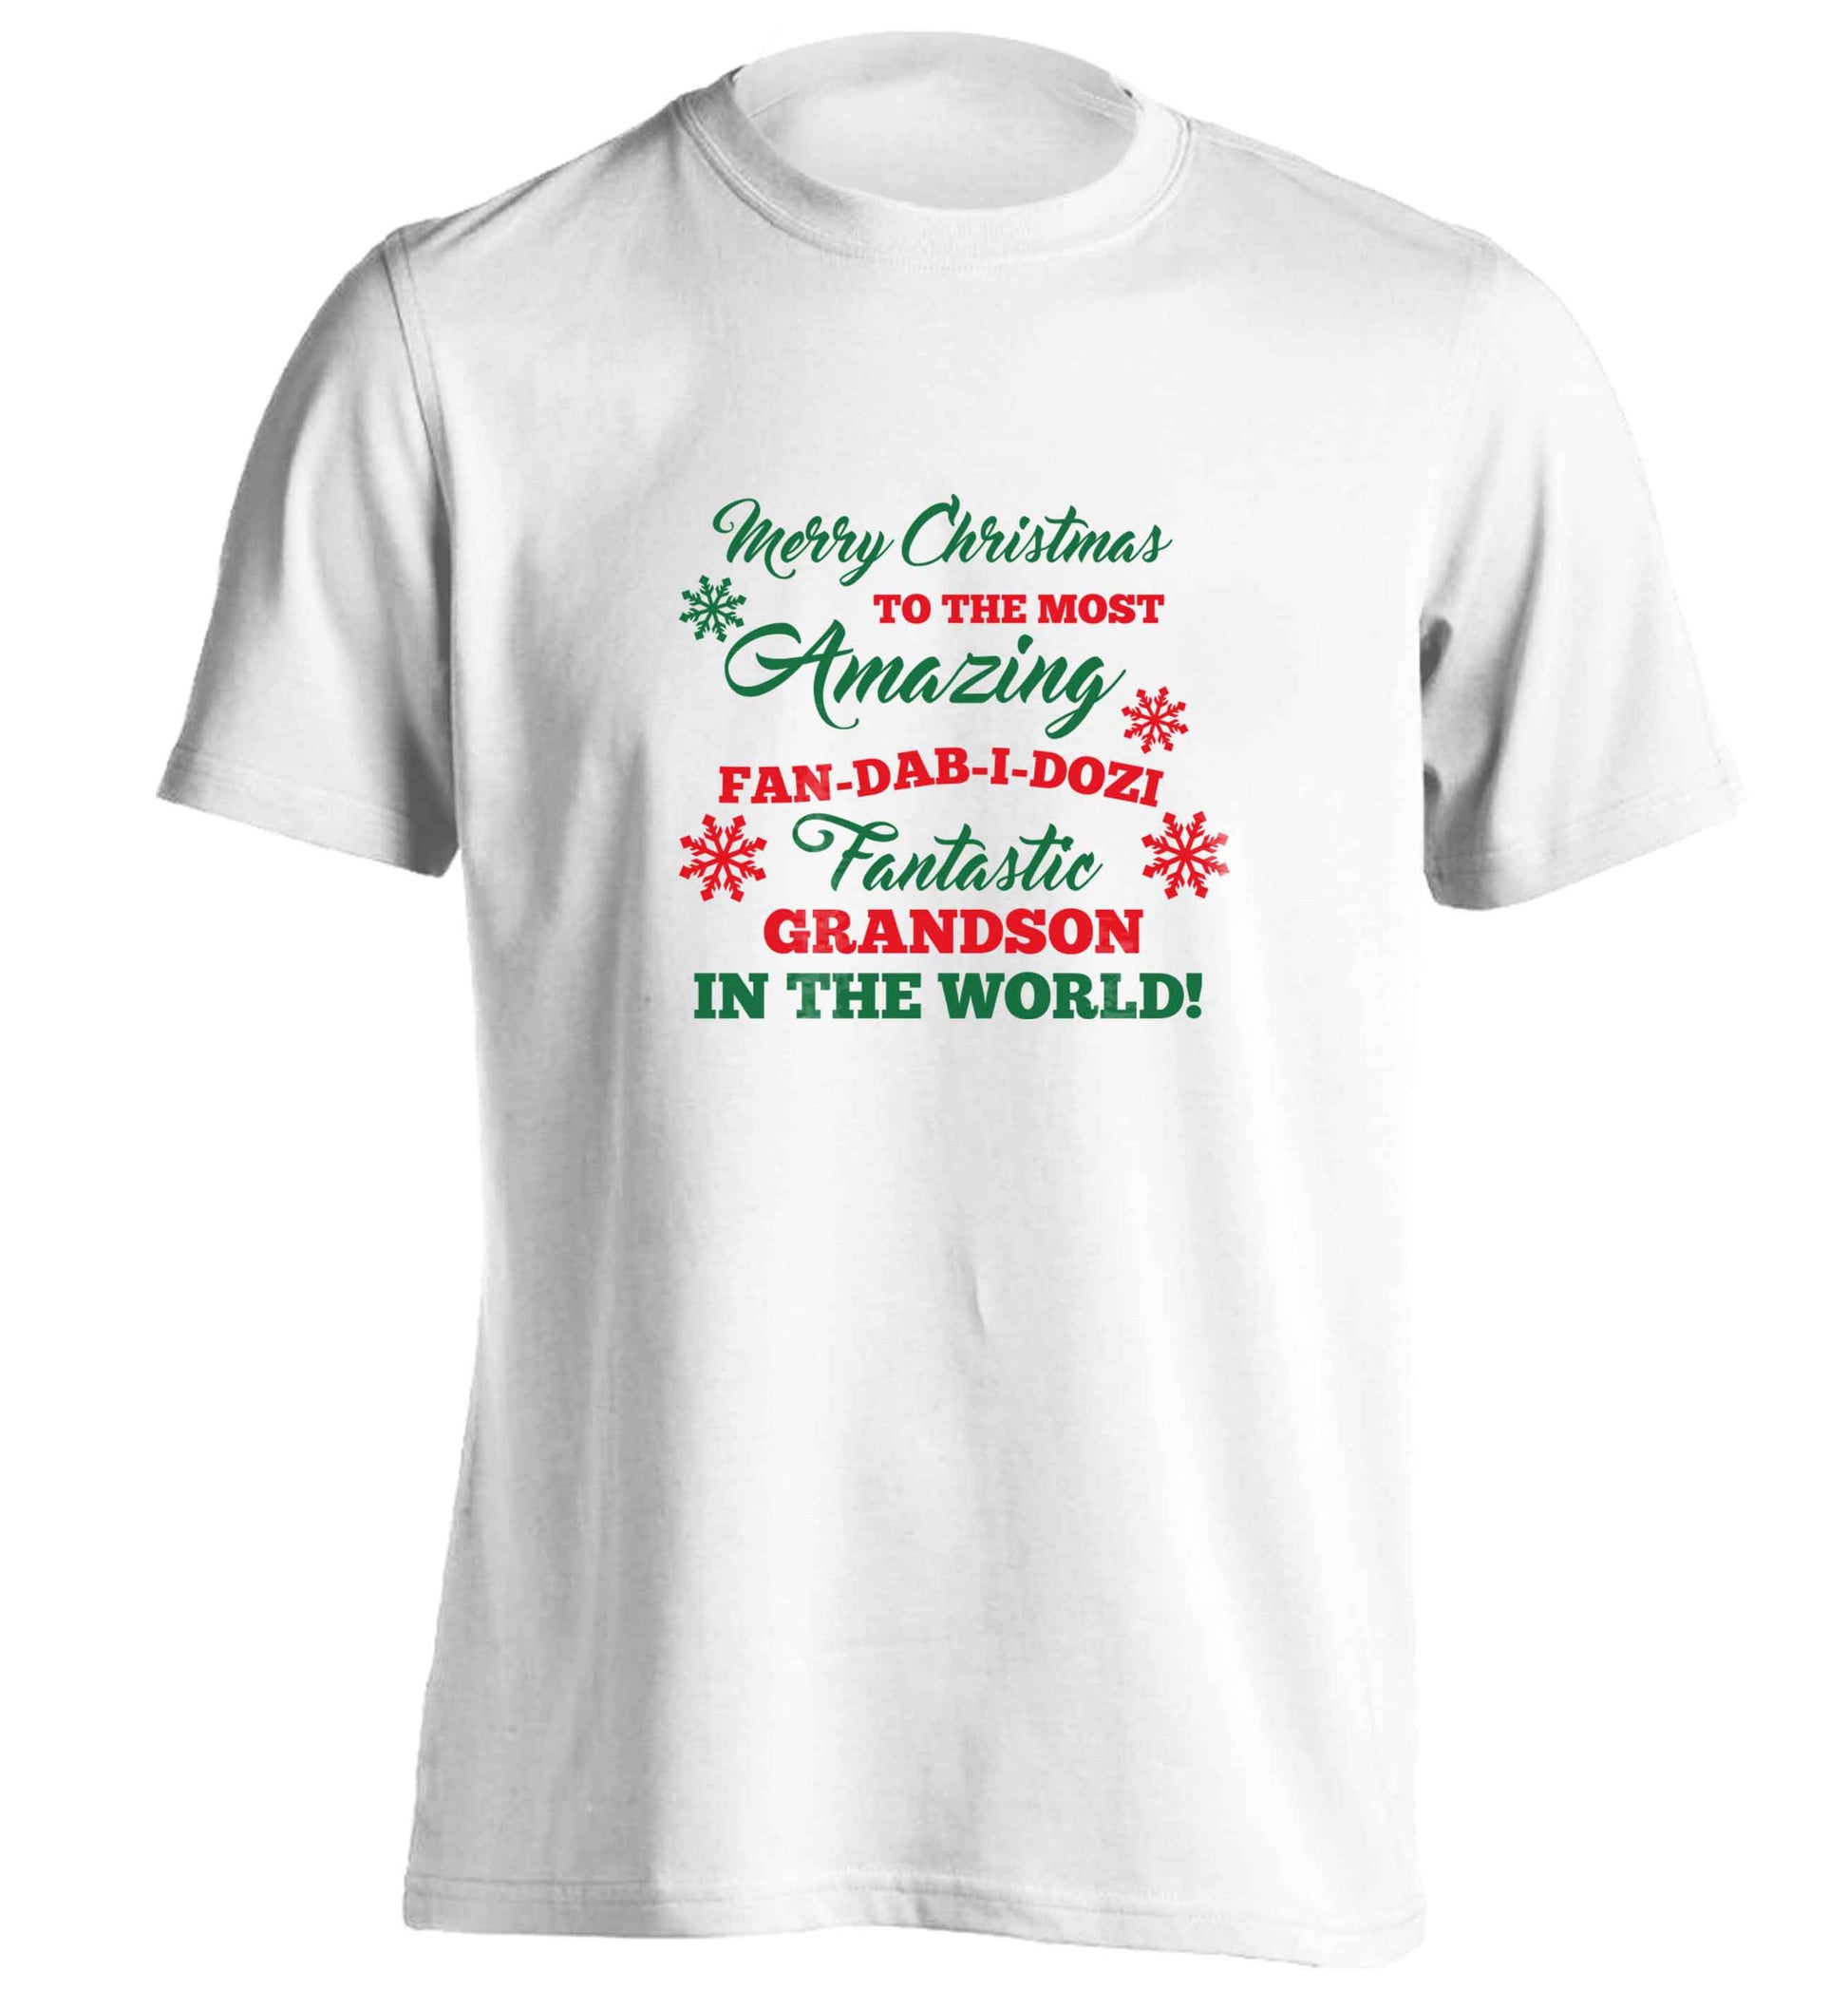 Merry Christmas to the most amazing fan-dab-i-dozi fantasic Grandson in the world adults unisex white Tshirt 2XL